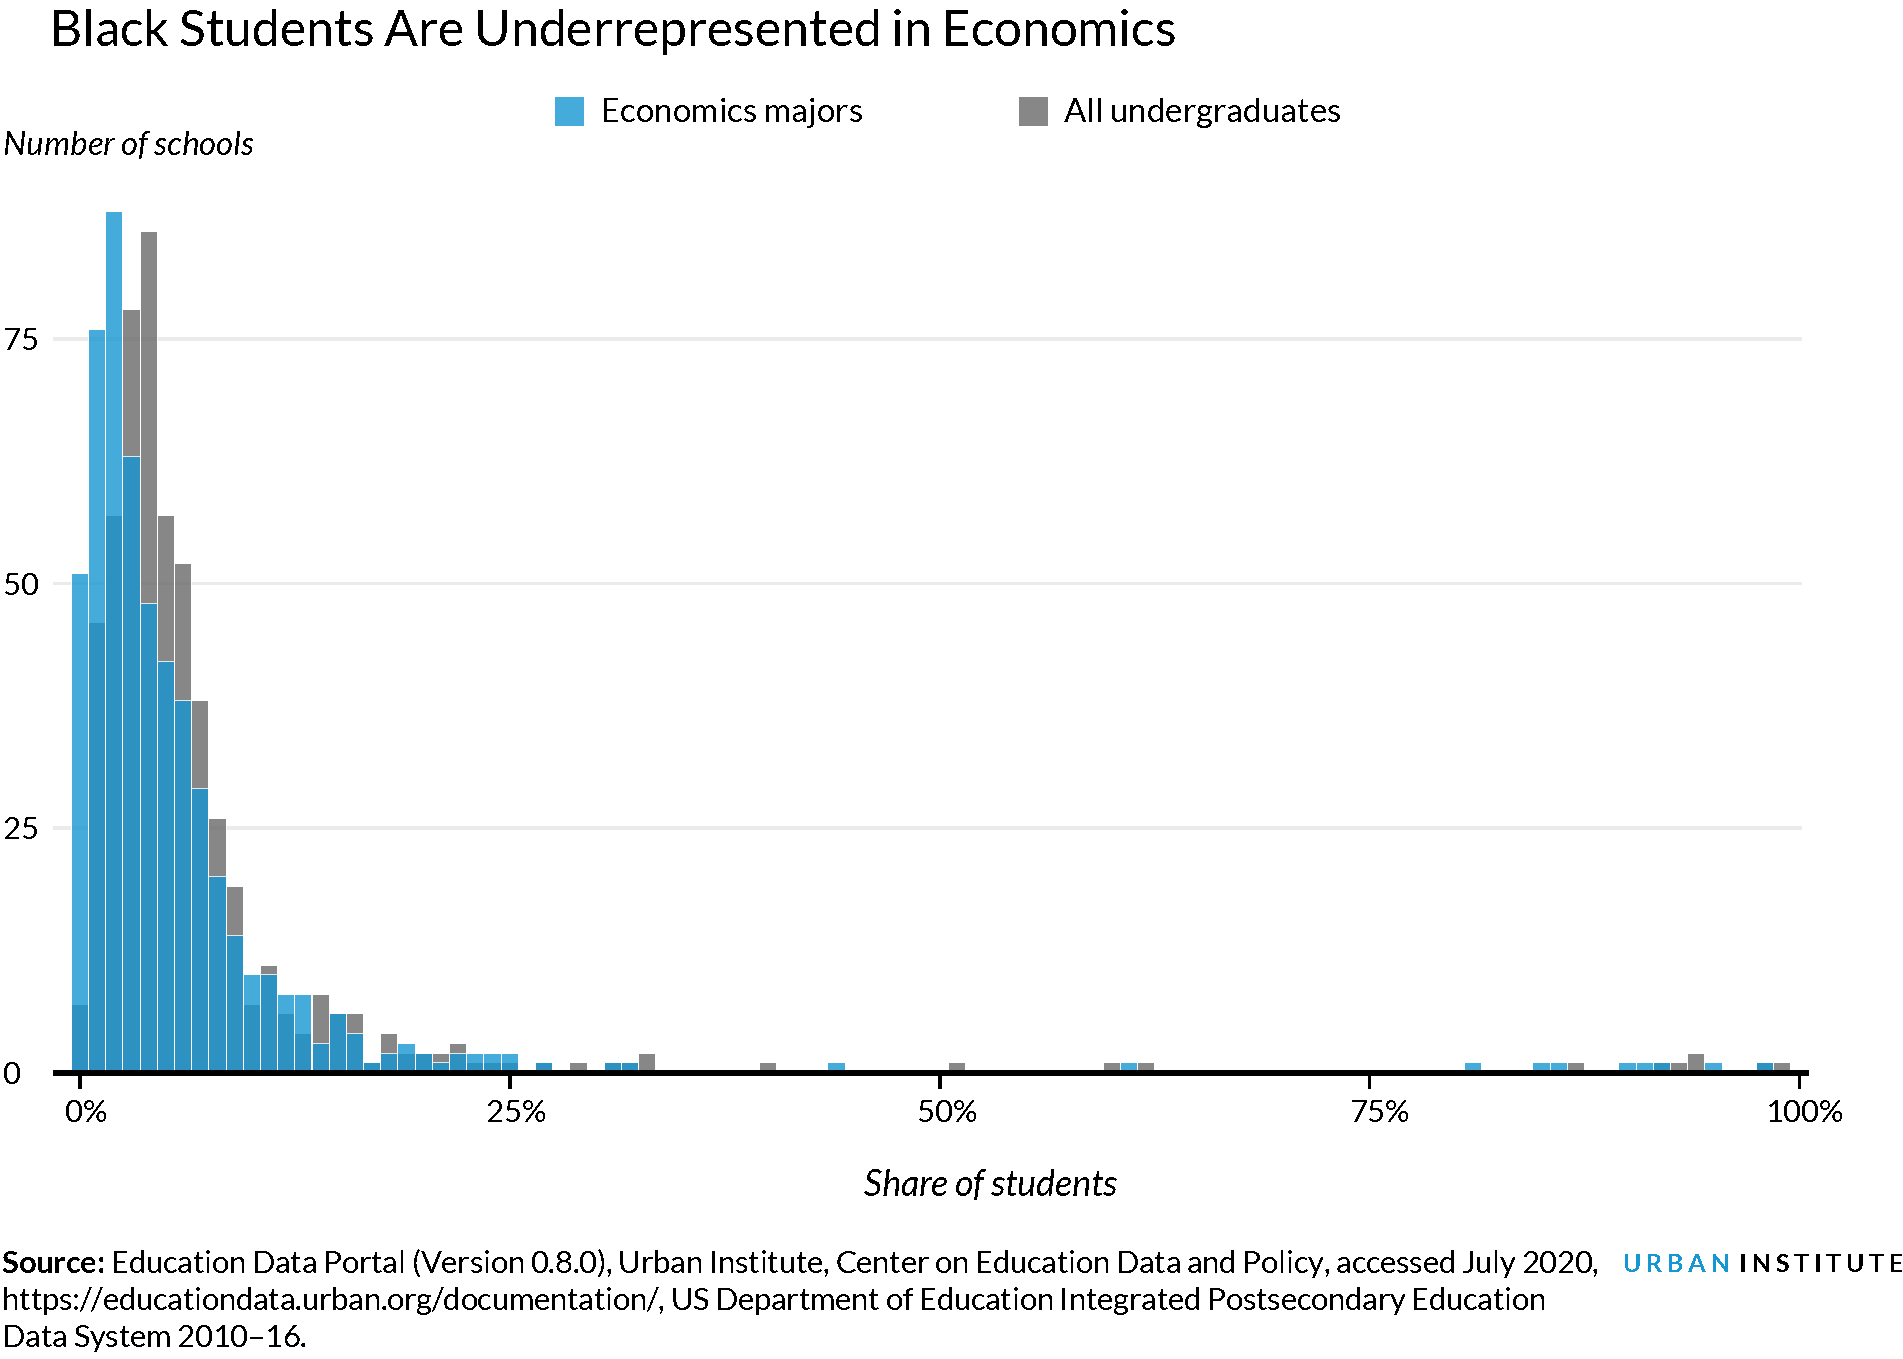 Black students are underrepresented in economics